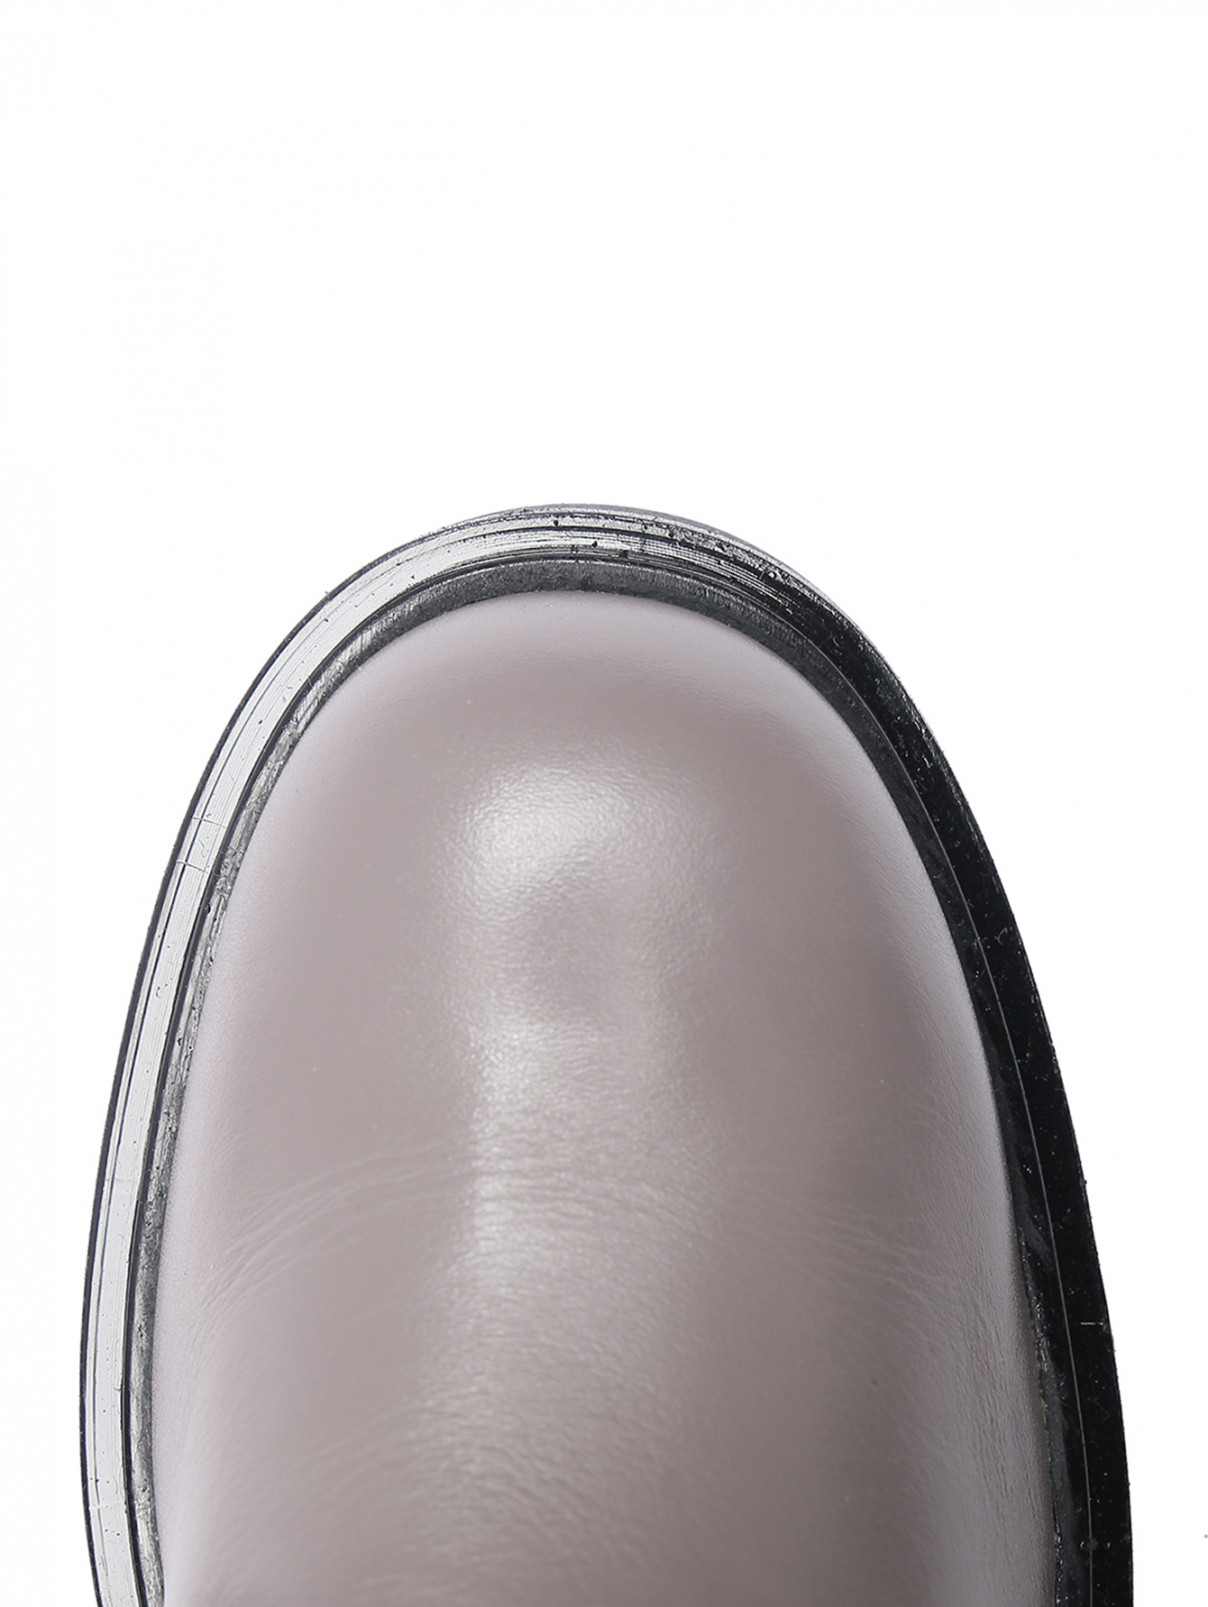 Ботинки из кожи на шнурках Riconte  –  Обтравка3  – Цвет:  Серый